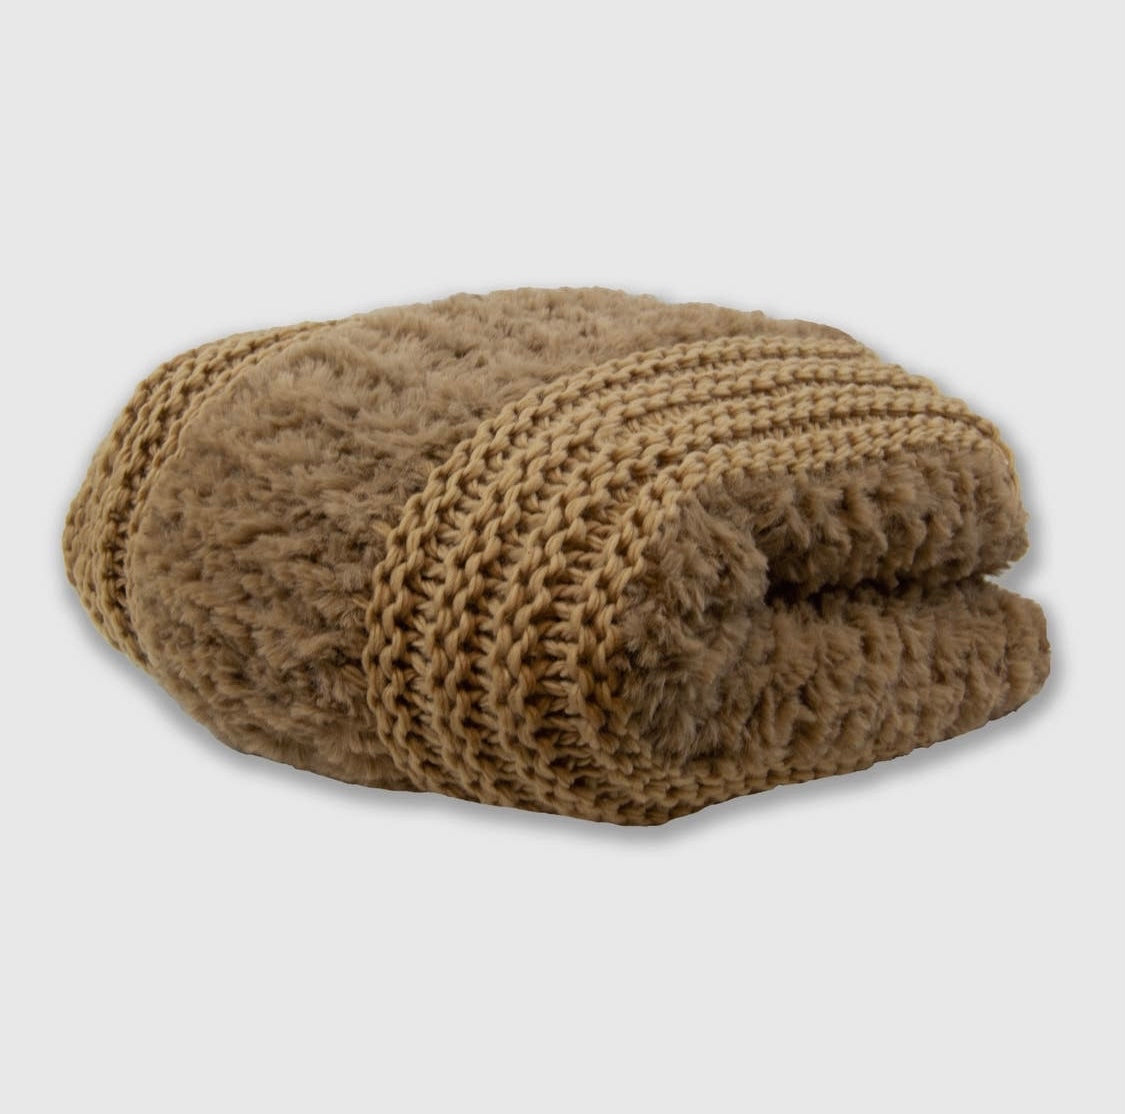 Hygge Plush Knit Throw Blanket